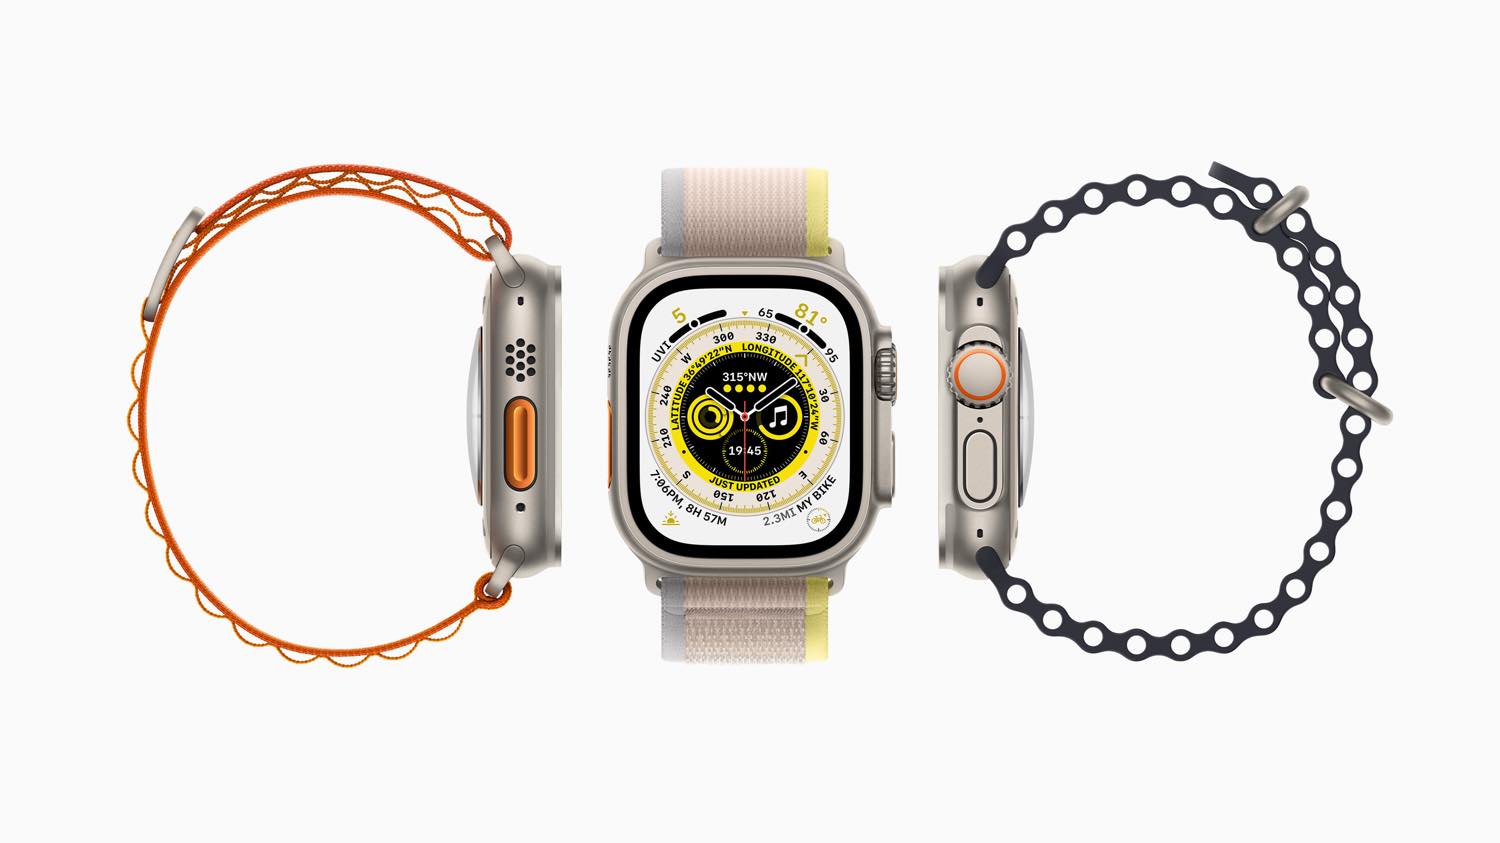 ｢Apple Watch Ultra｣に同梱される｢Apple Watch磁気高速充電 – USB-Cケーブル｣は編み込み式ケーブルを採用